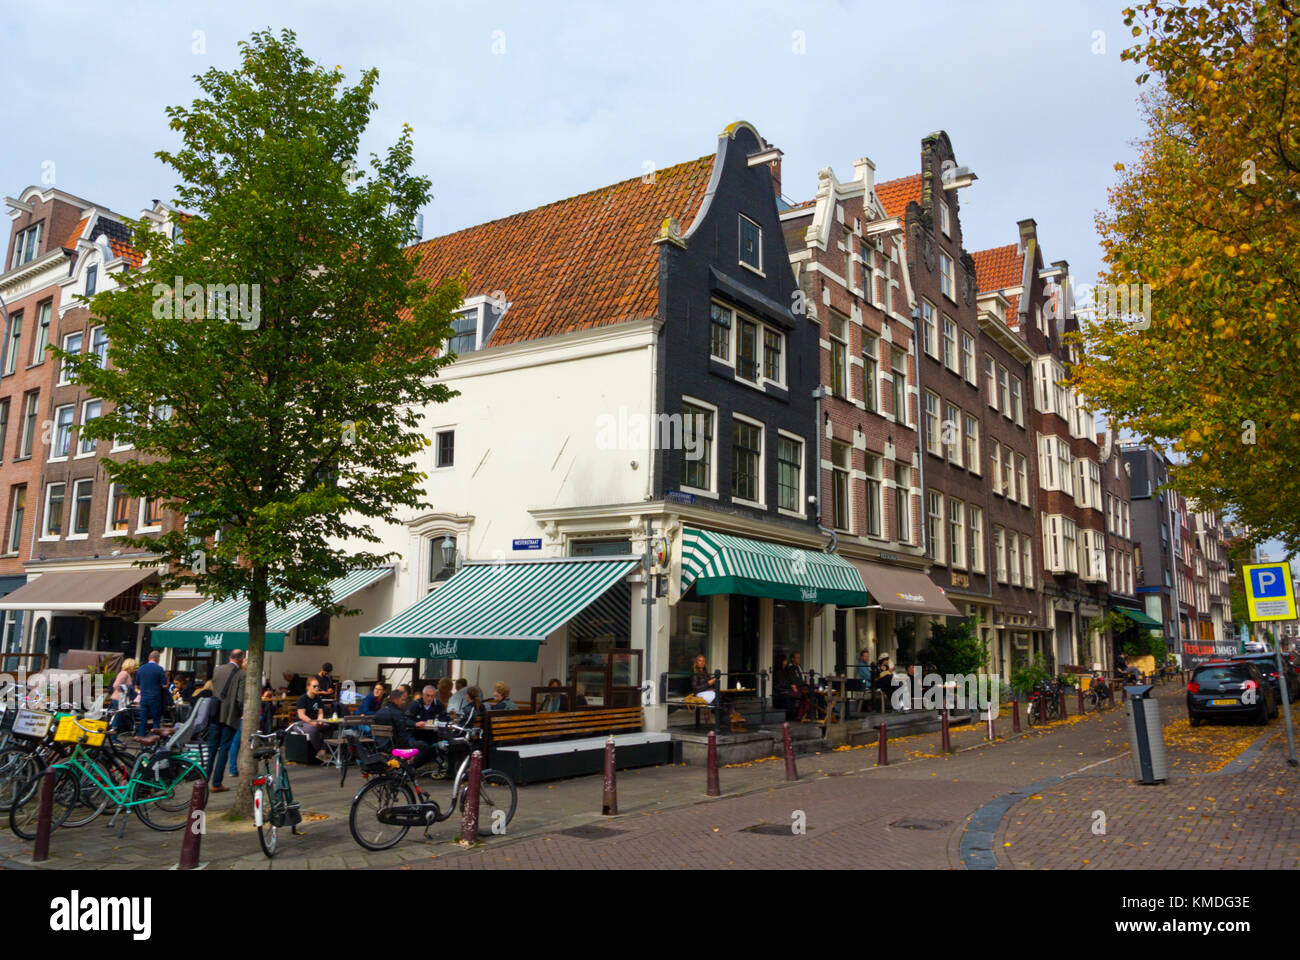 Winkel 46 e altri ristoranti, Noordermarkt, quartiere Jordaan, Amsterdam,  Paesi Bassi Foto stock - Alamy